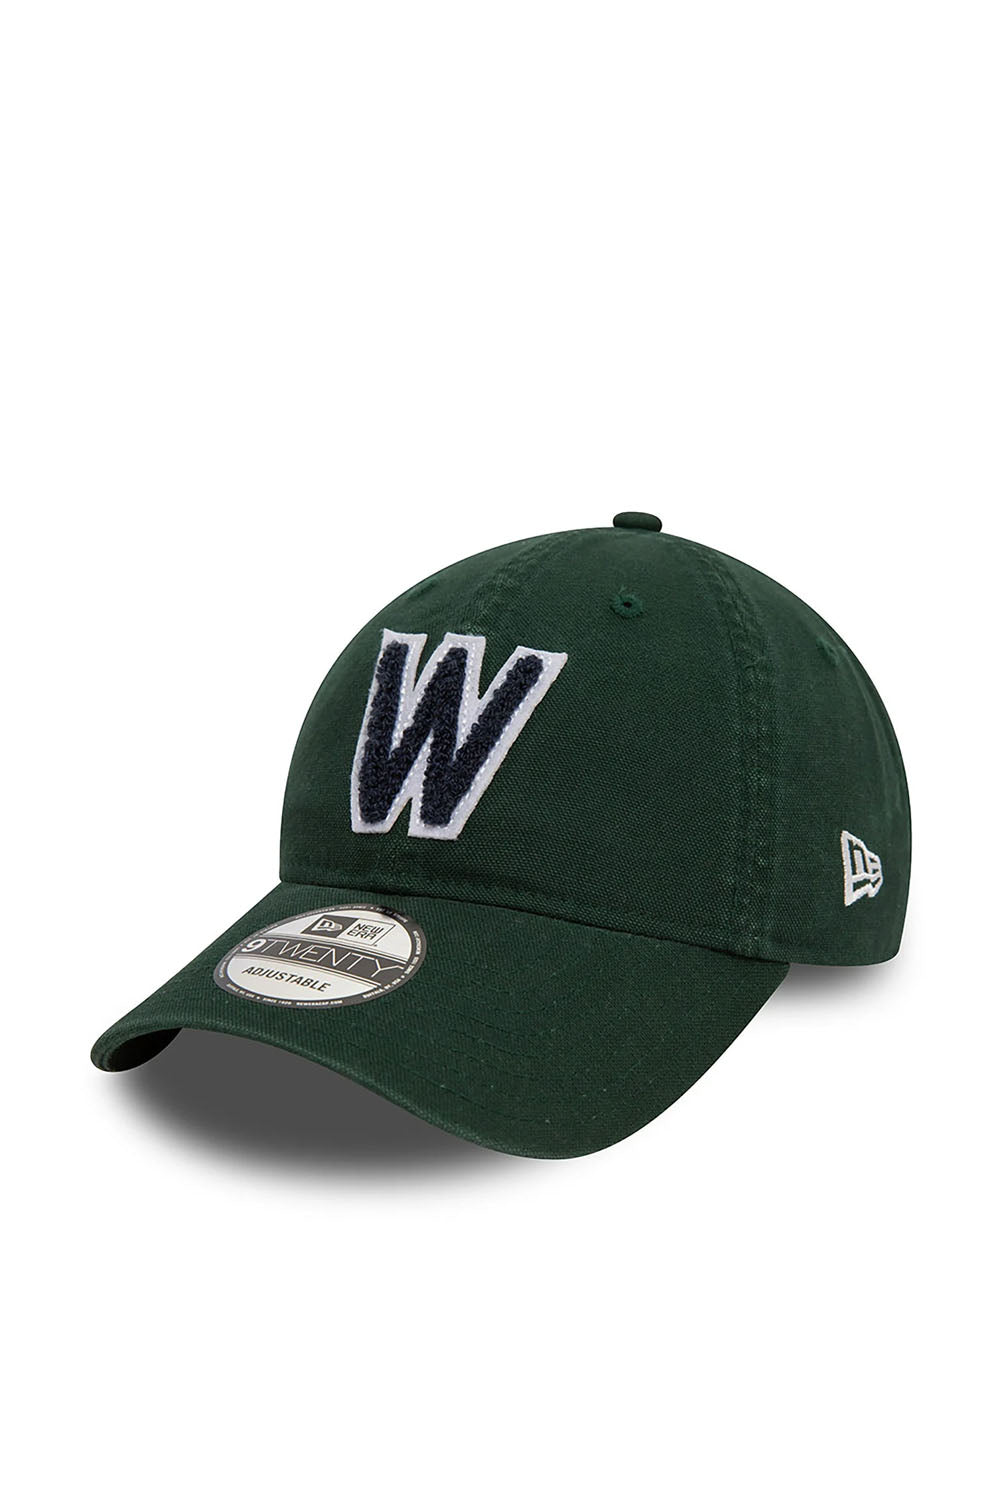 9TWENTY Washington Nationals MLB Varsity Cooperstown Cap